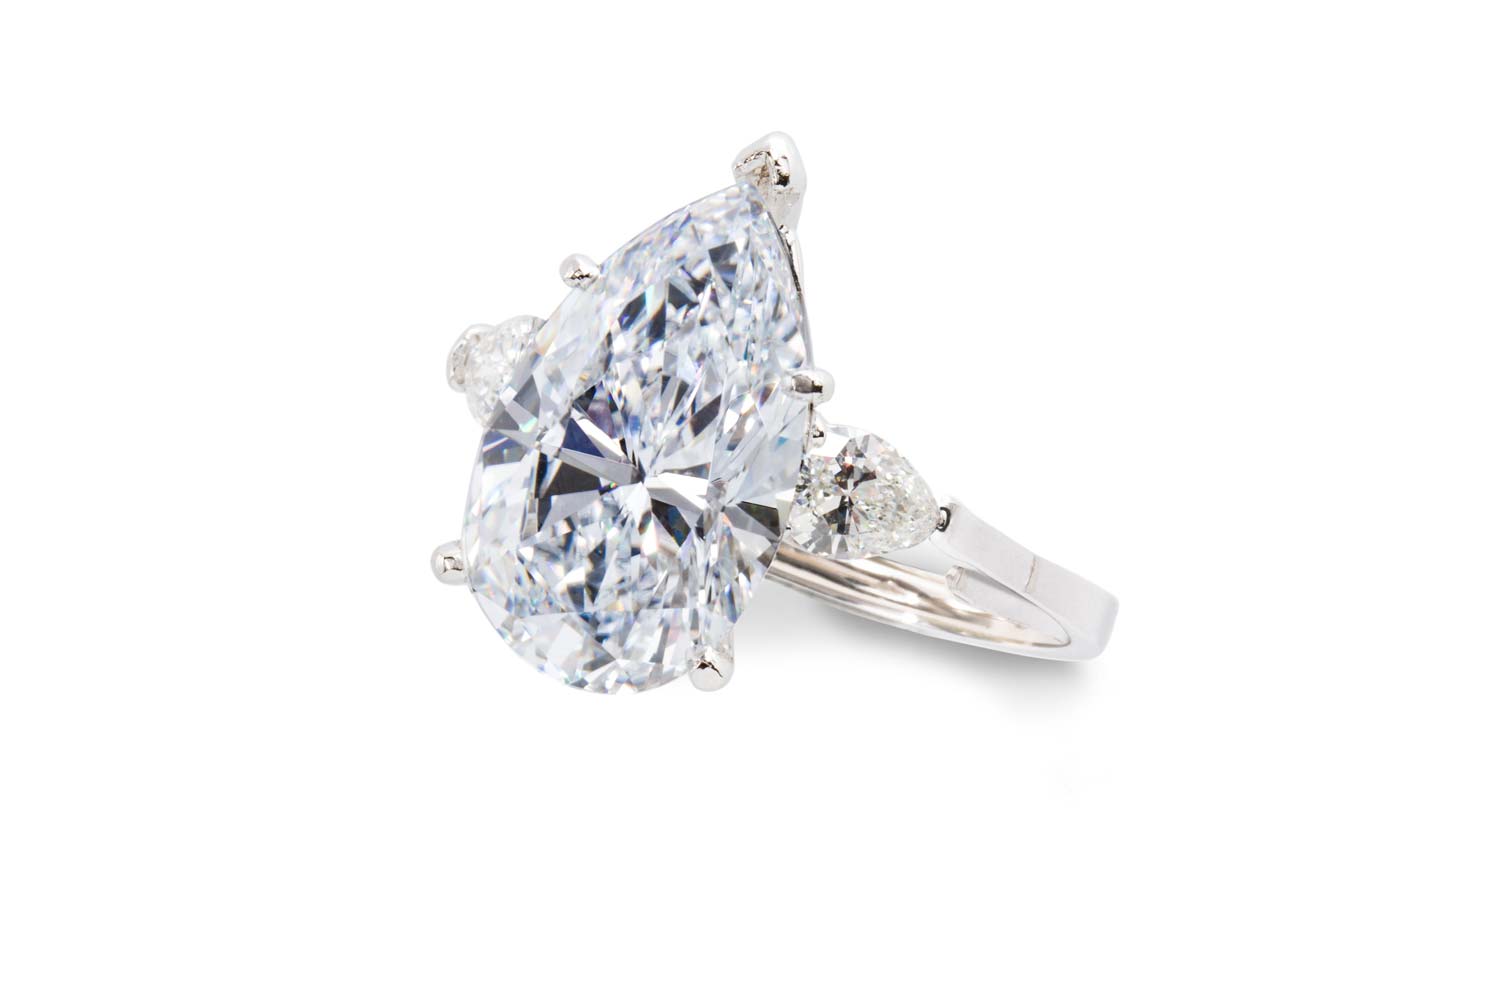 8.58 carat diamond ring, estimate $200,000-$300,000. Image courtesy Clars Auction Gallery